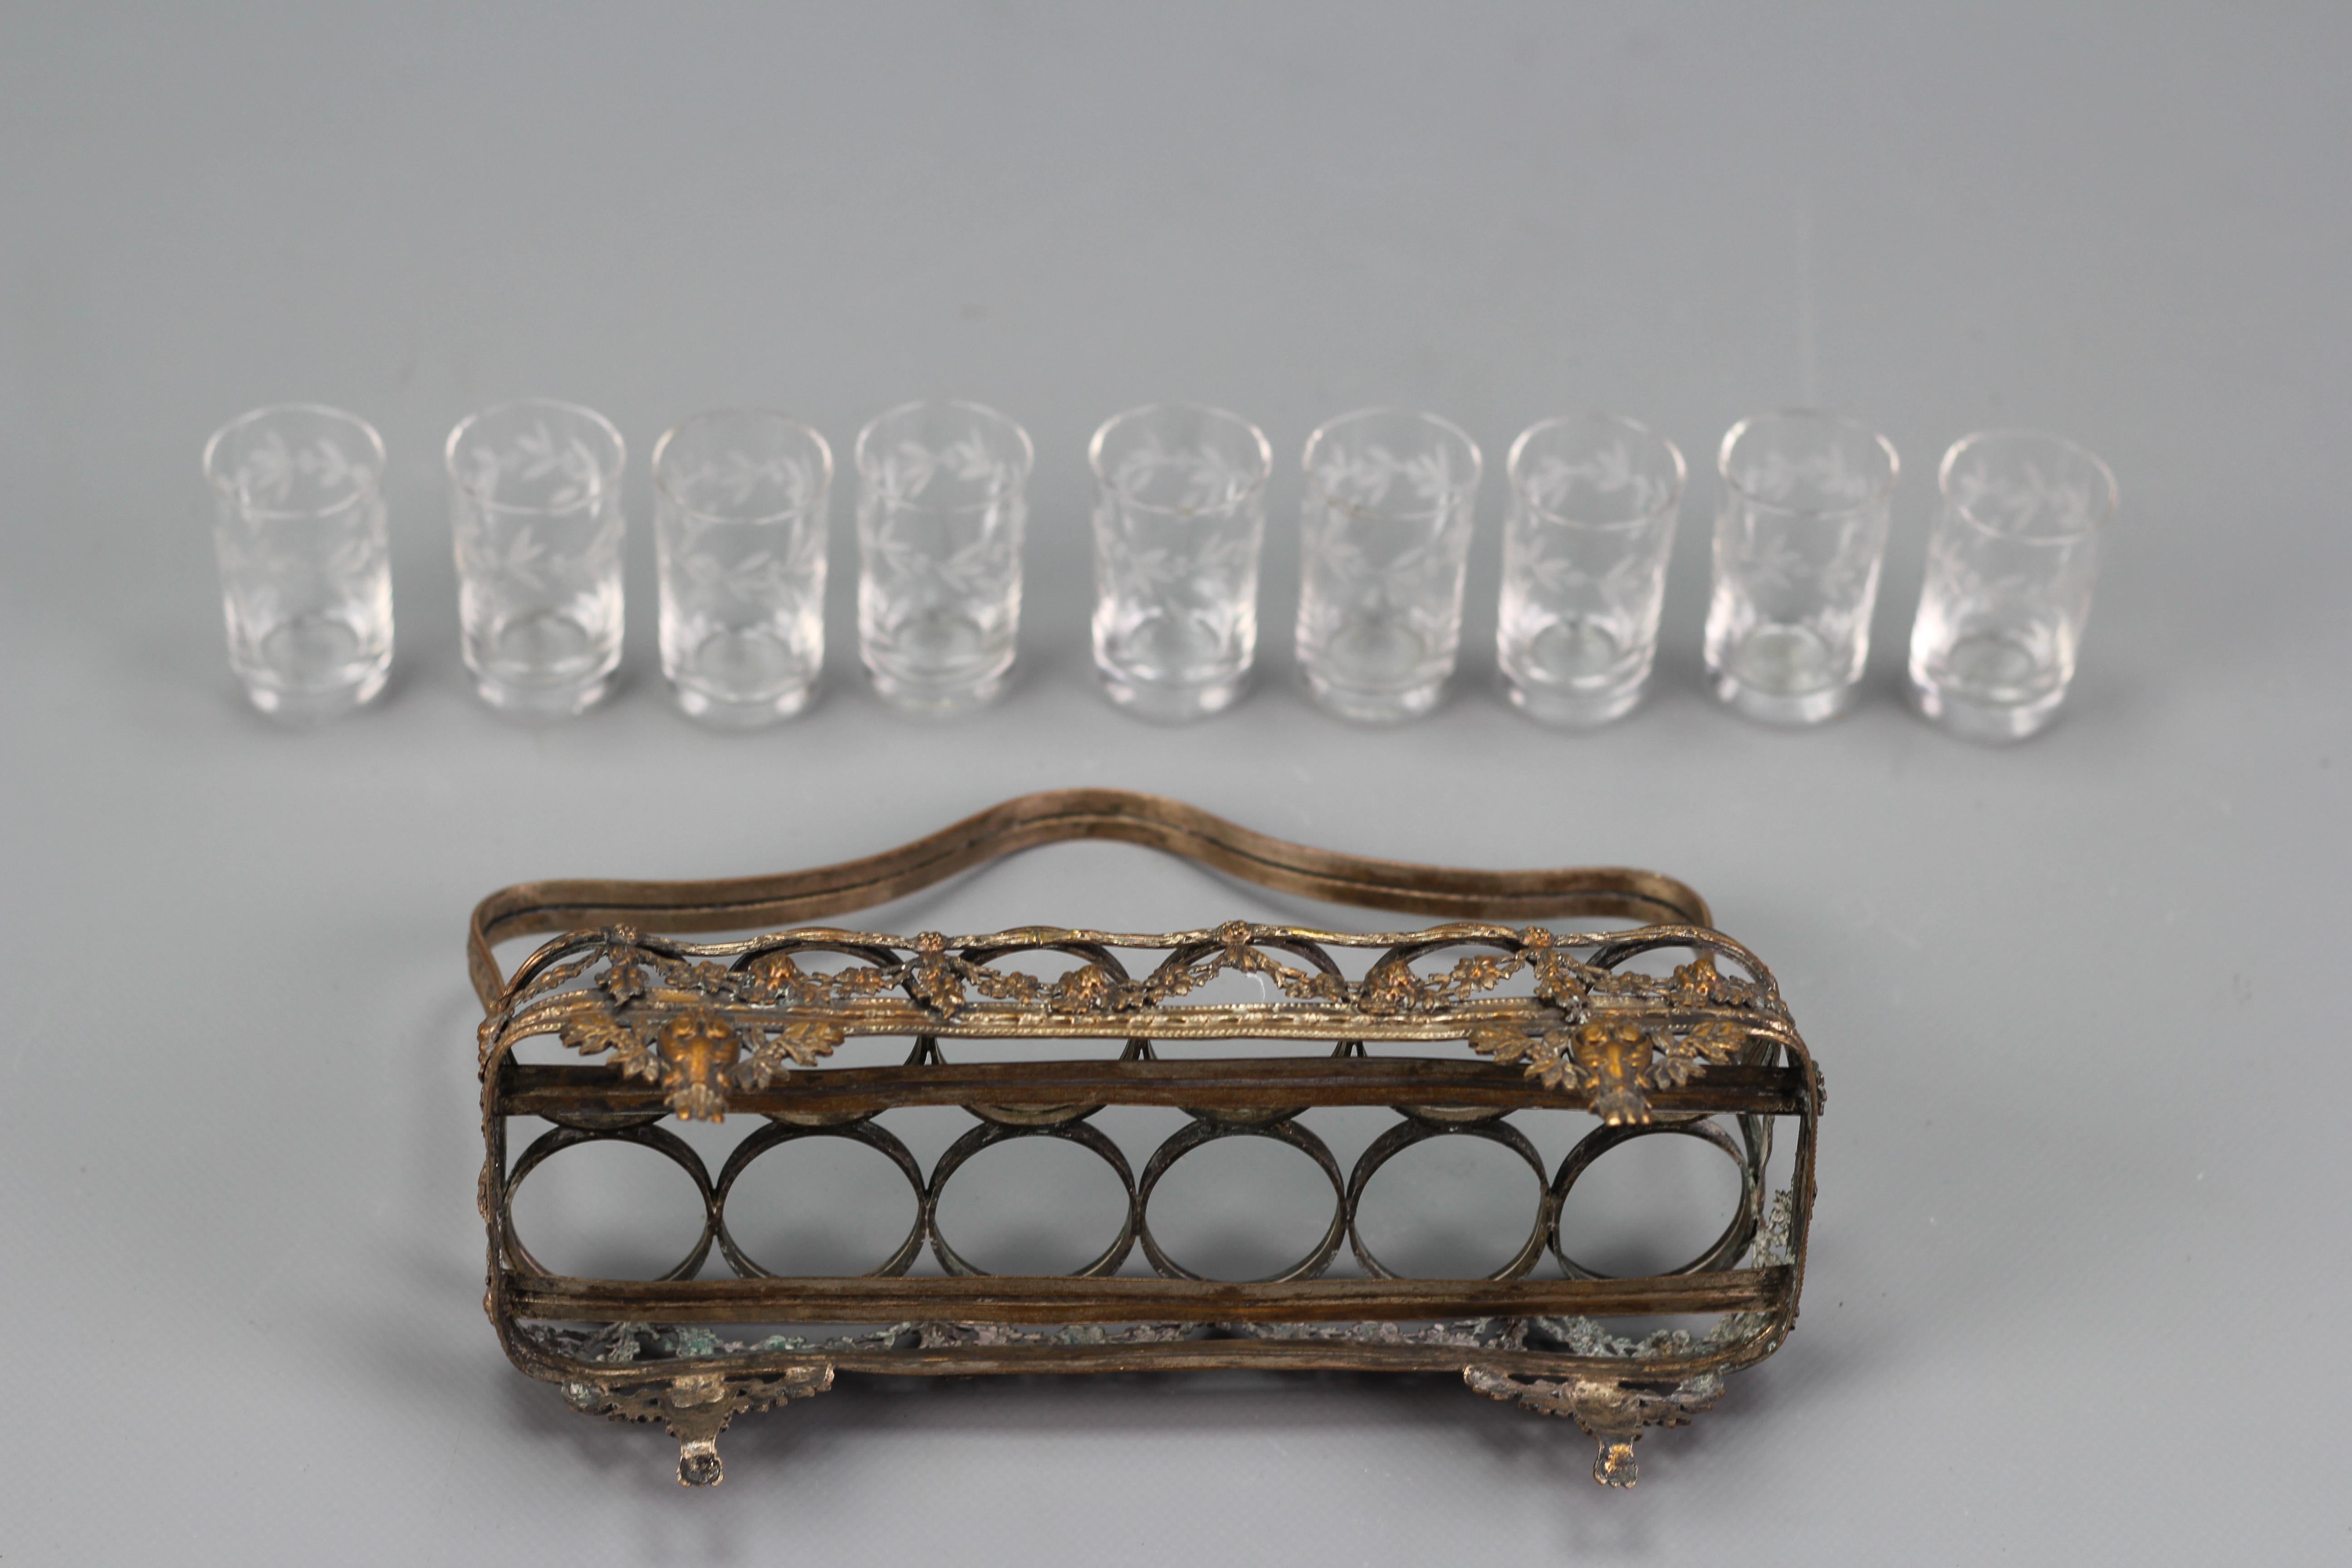 French Art Nouveau Nine Glasses and Brass Basket Serving Set, ca. 1920 For Sale 12